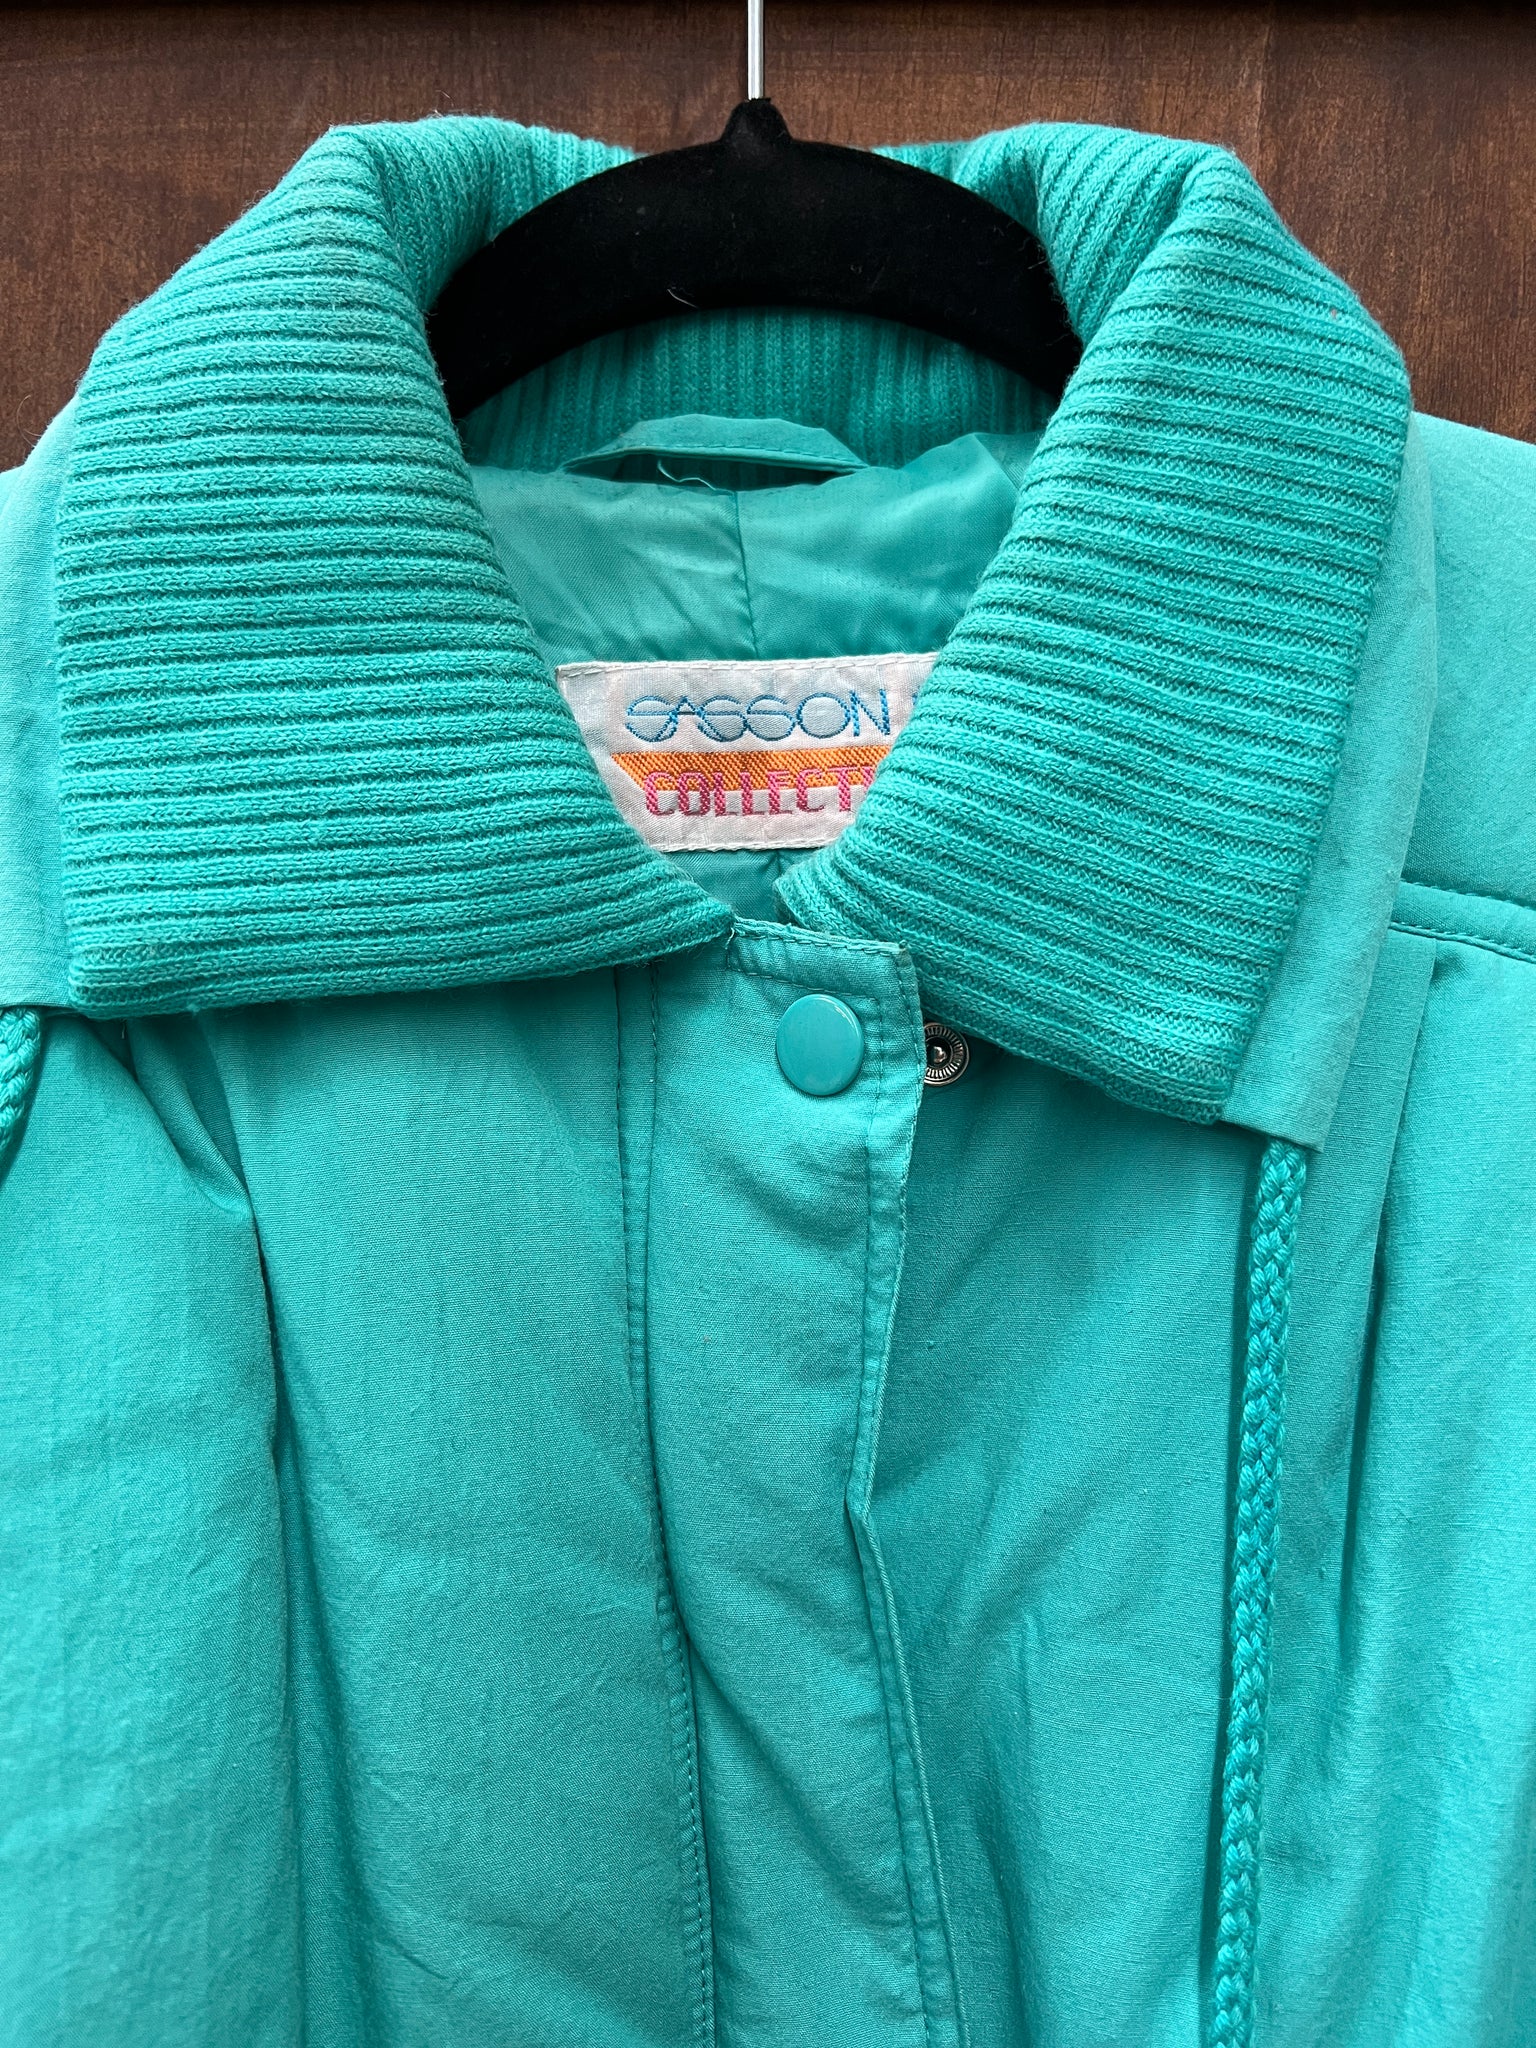 1980s JACKET- COAT- Sasson Teal short winter coat